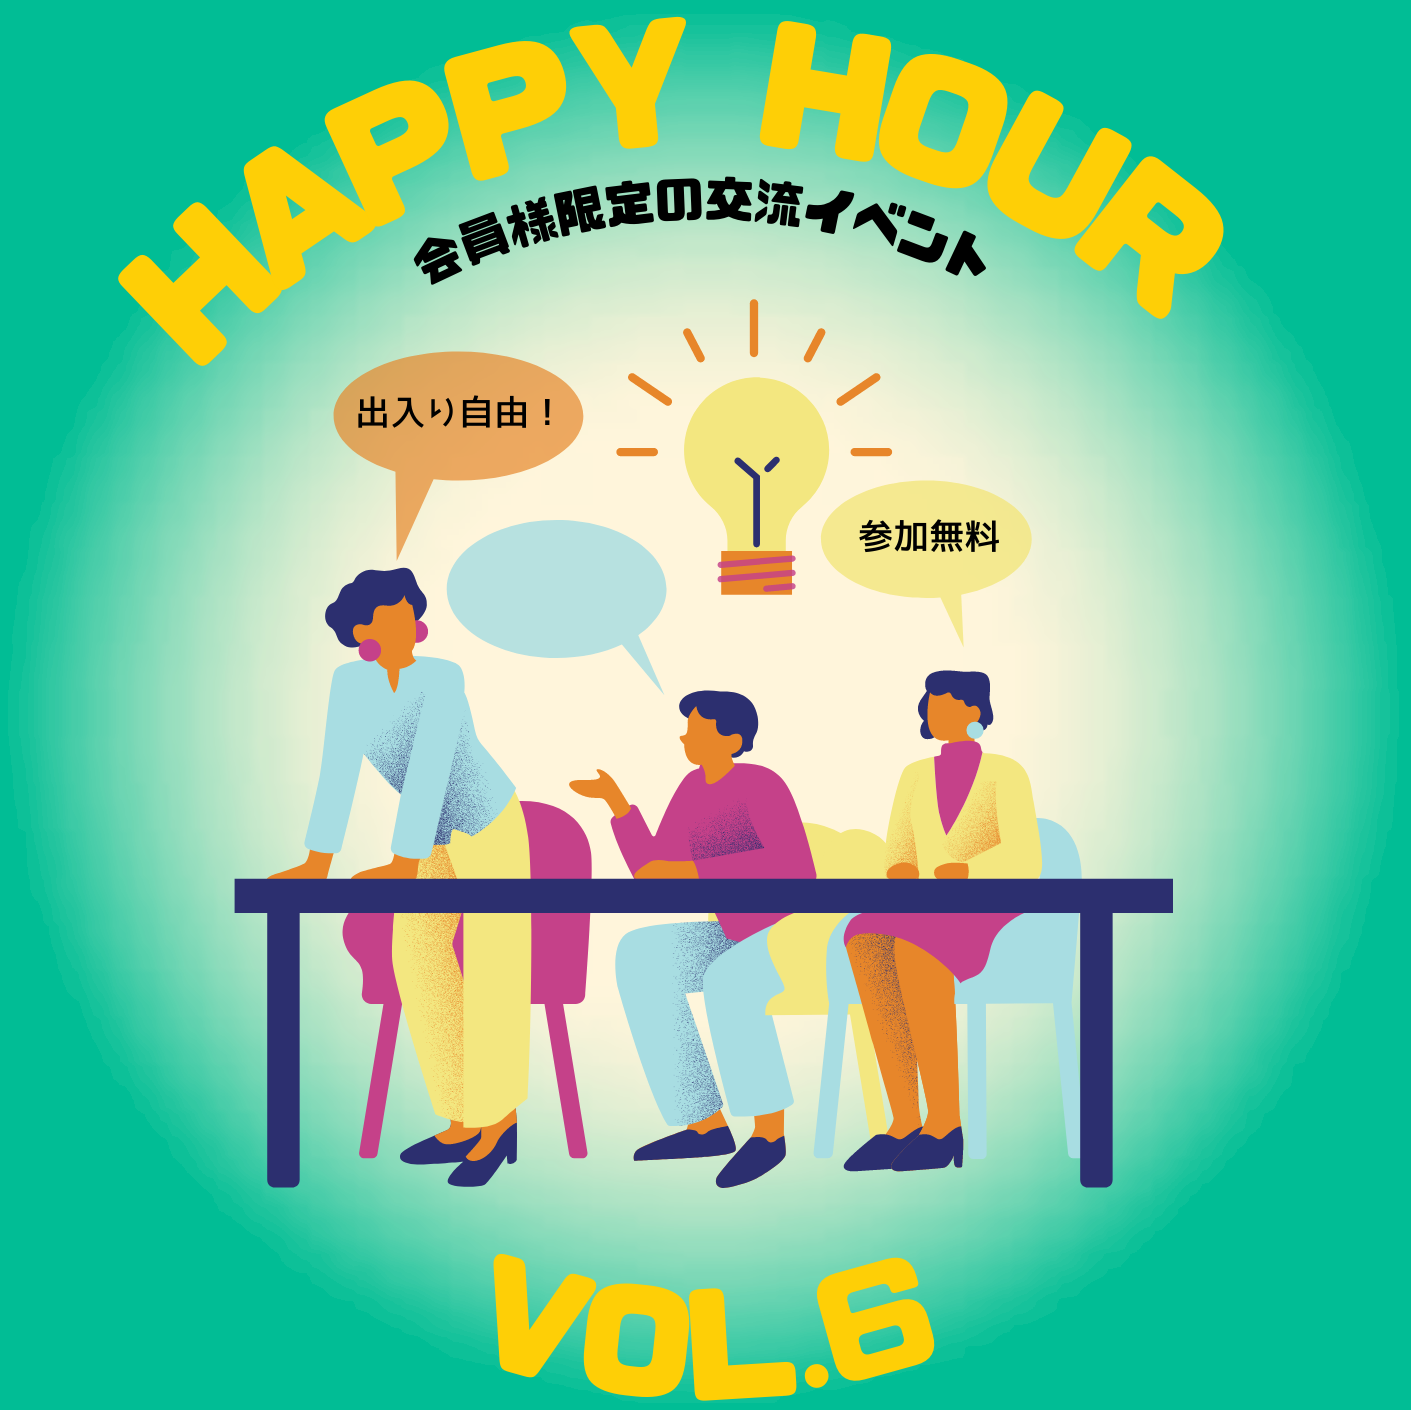 2023/6/8 HAPPY HOUR（交流会）vol.6